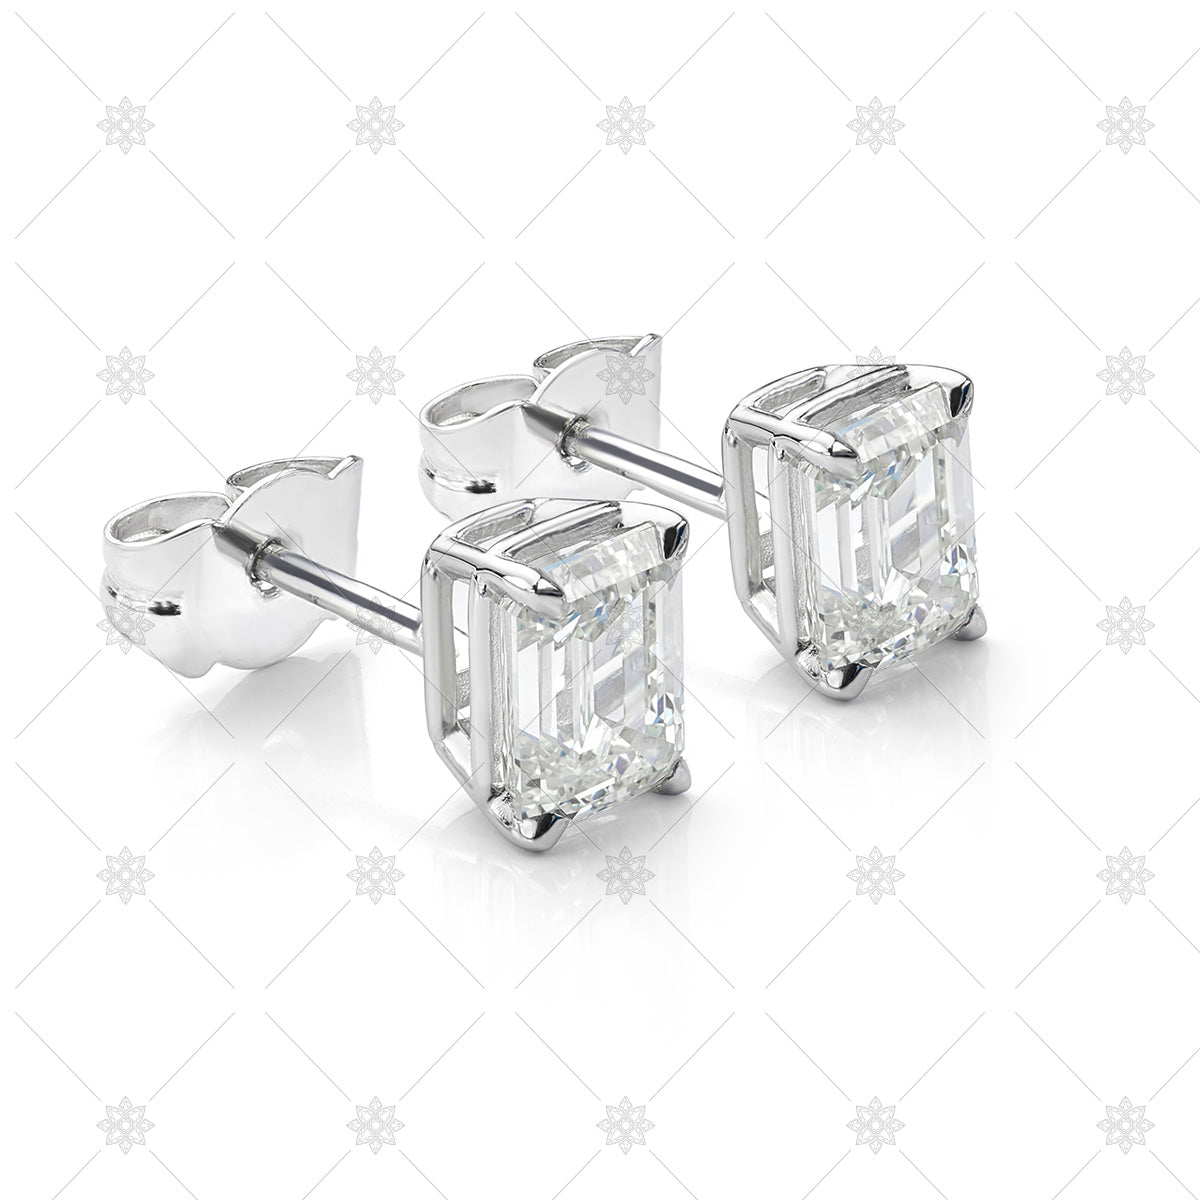 Pair of Emerald cut diamond stud earrings jewellery stock photograph